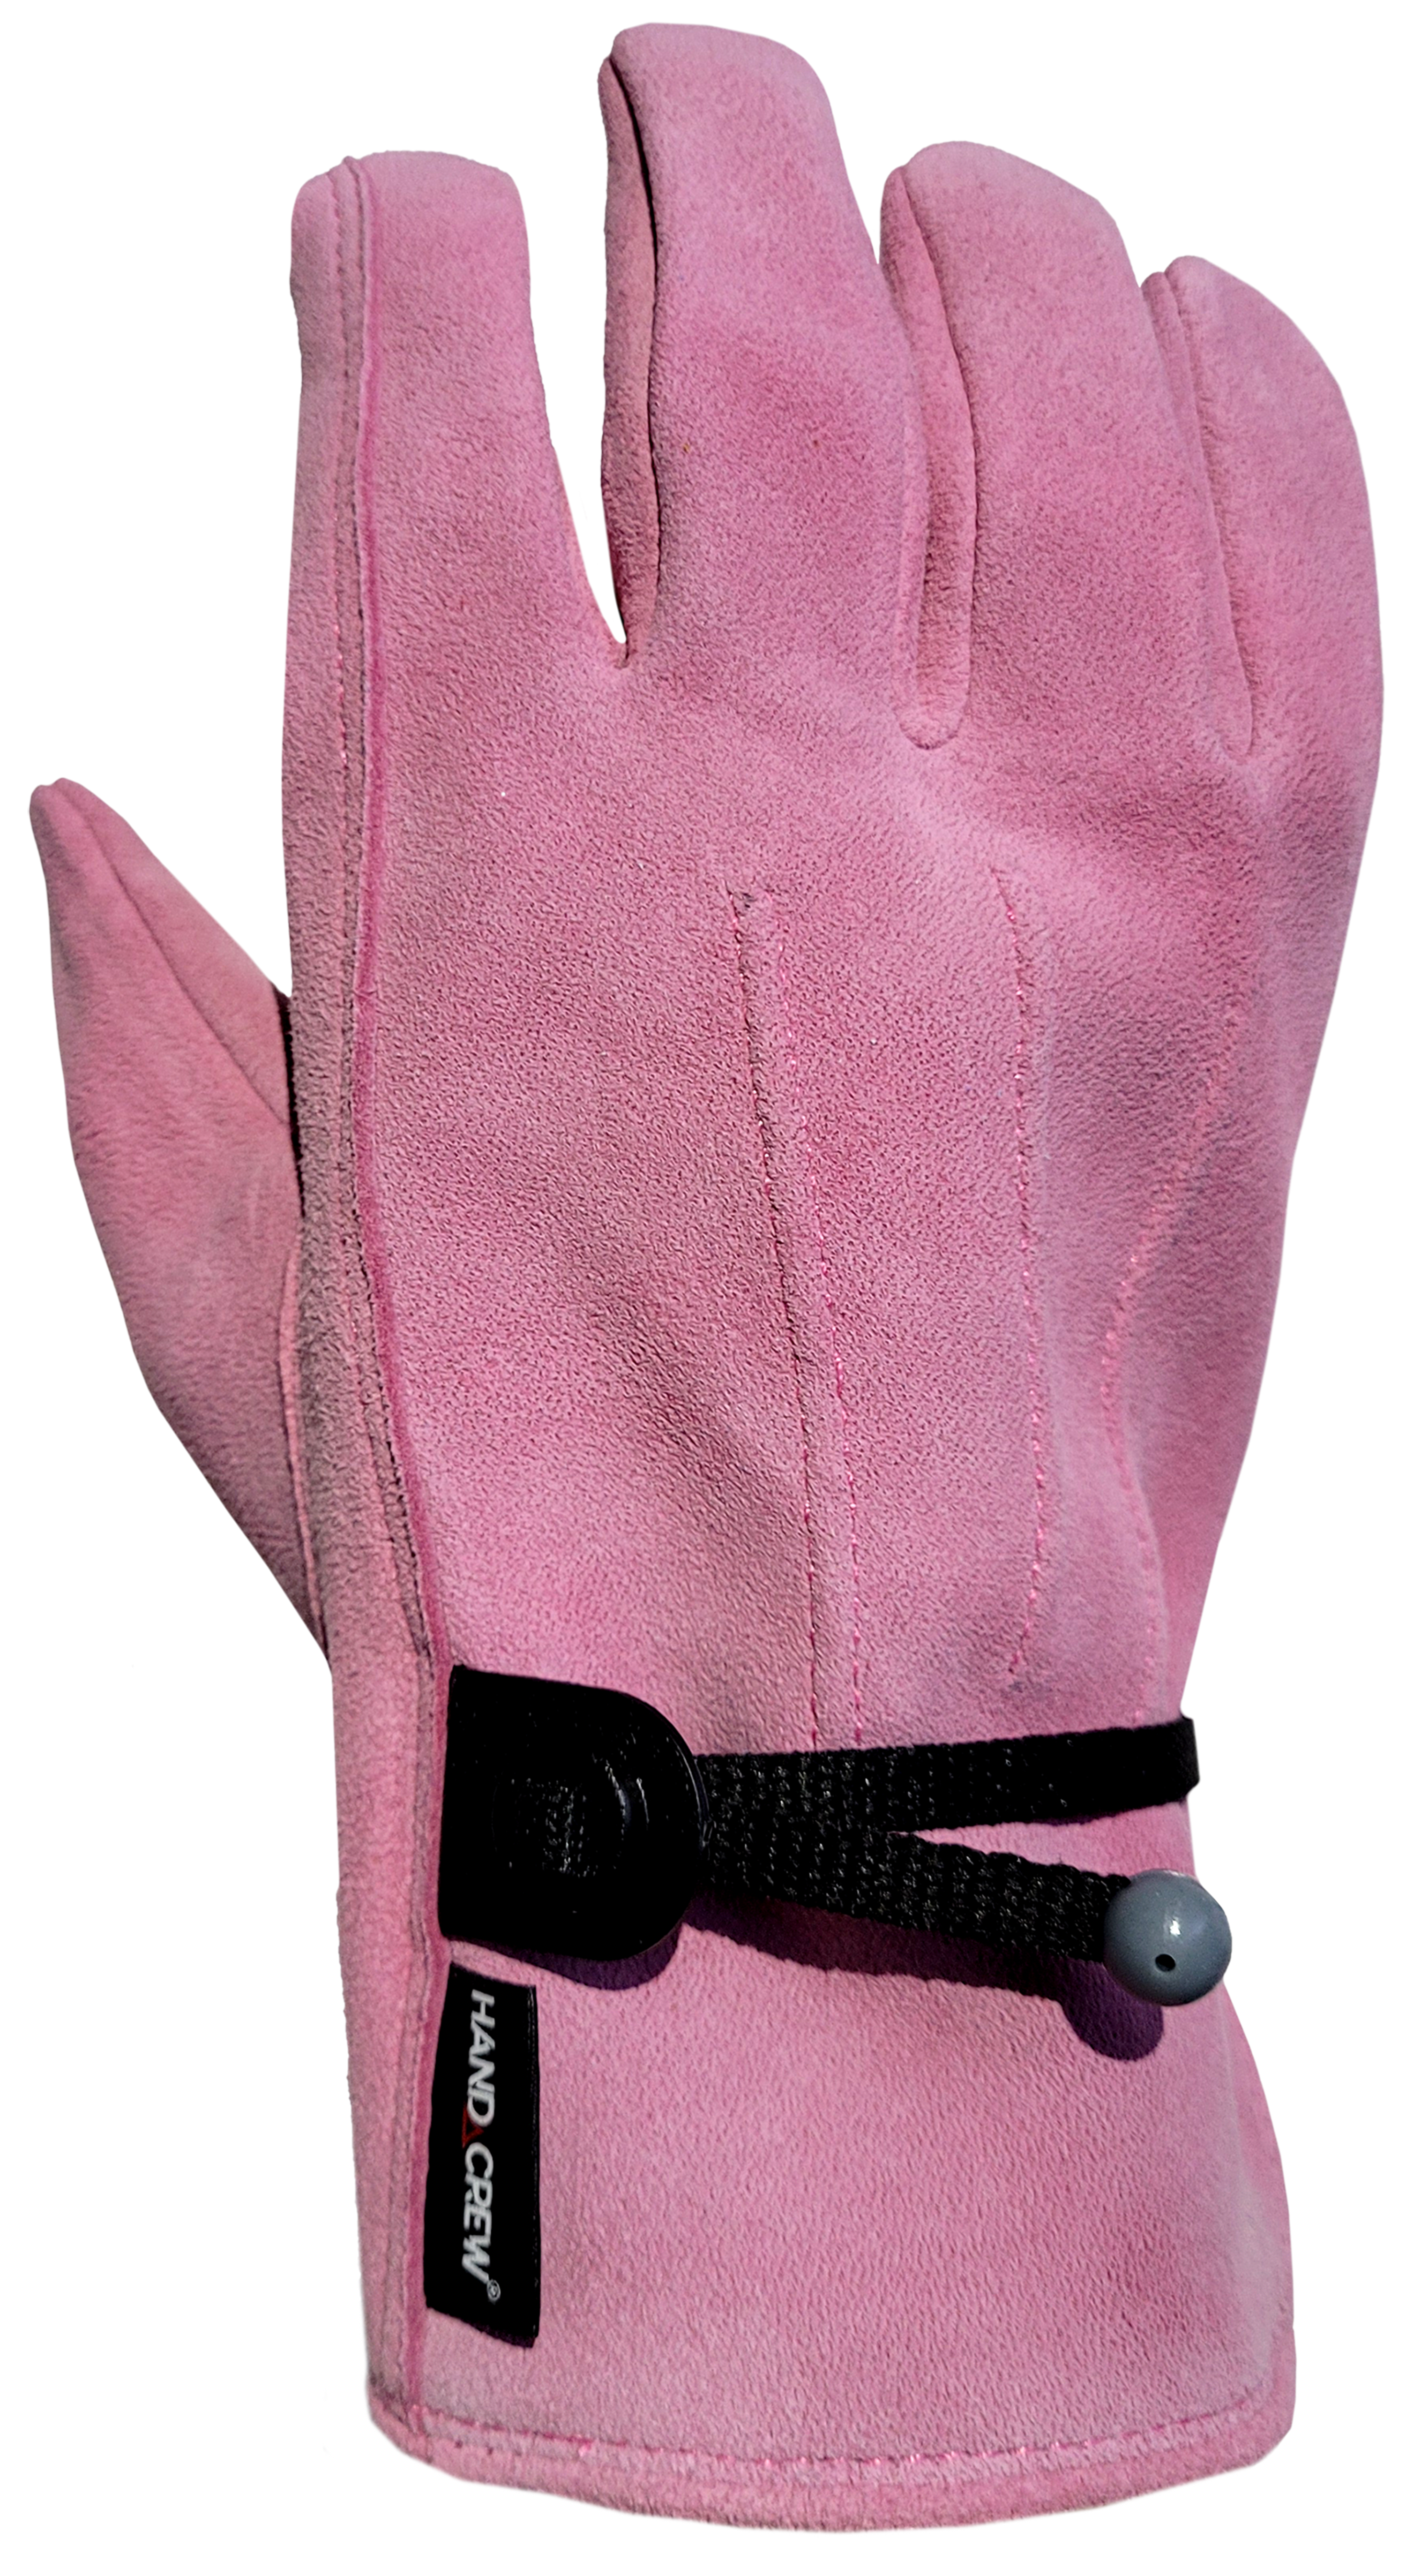 Ironclad Tuff Chix Women's Work Gloves TCX, Designed for Women's